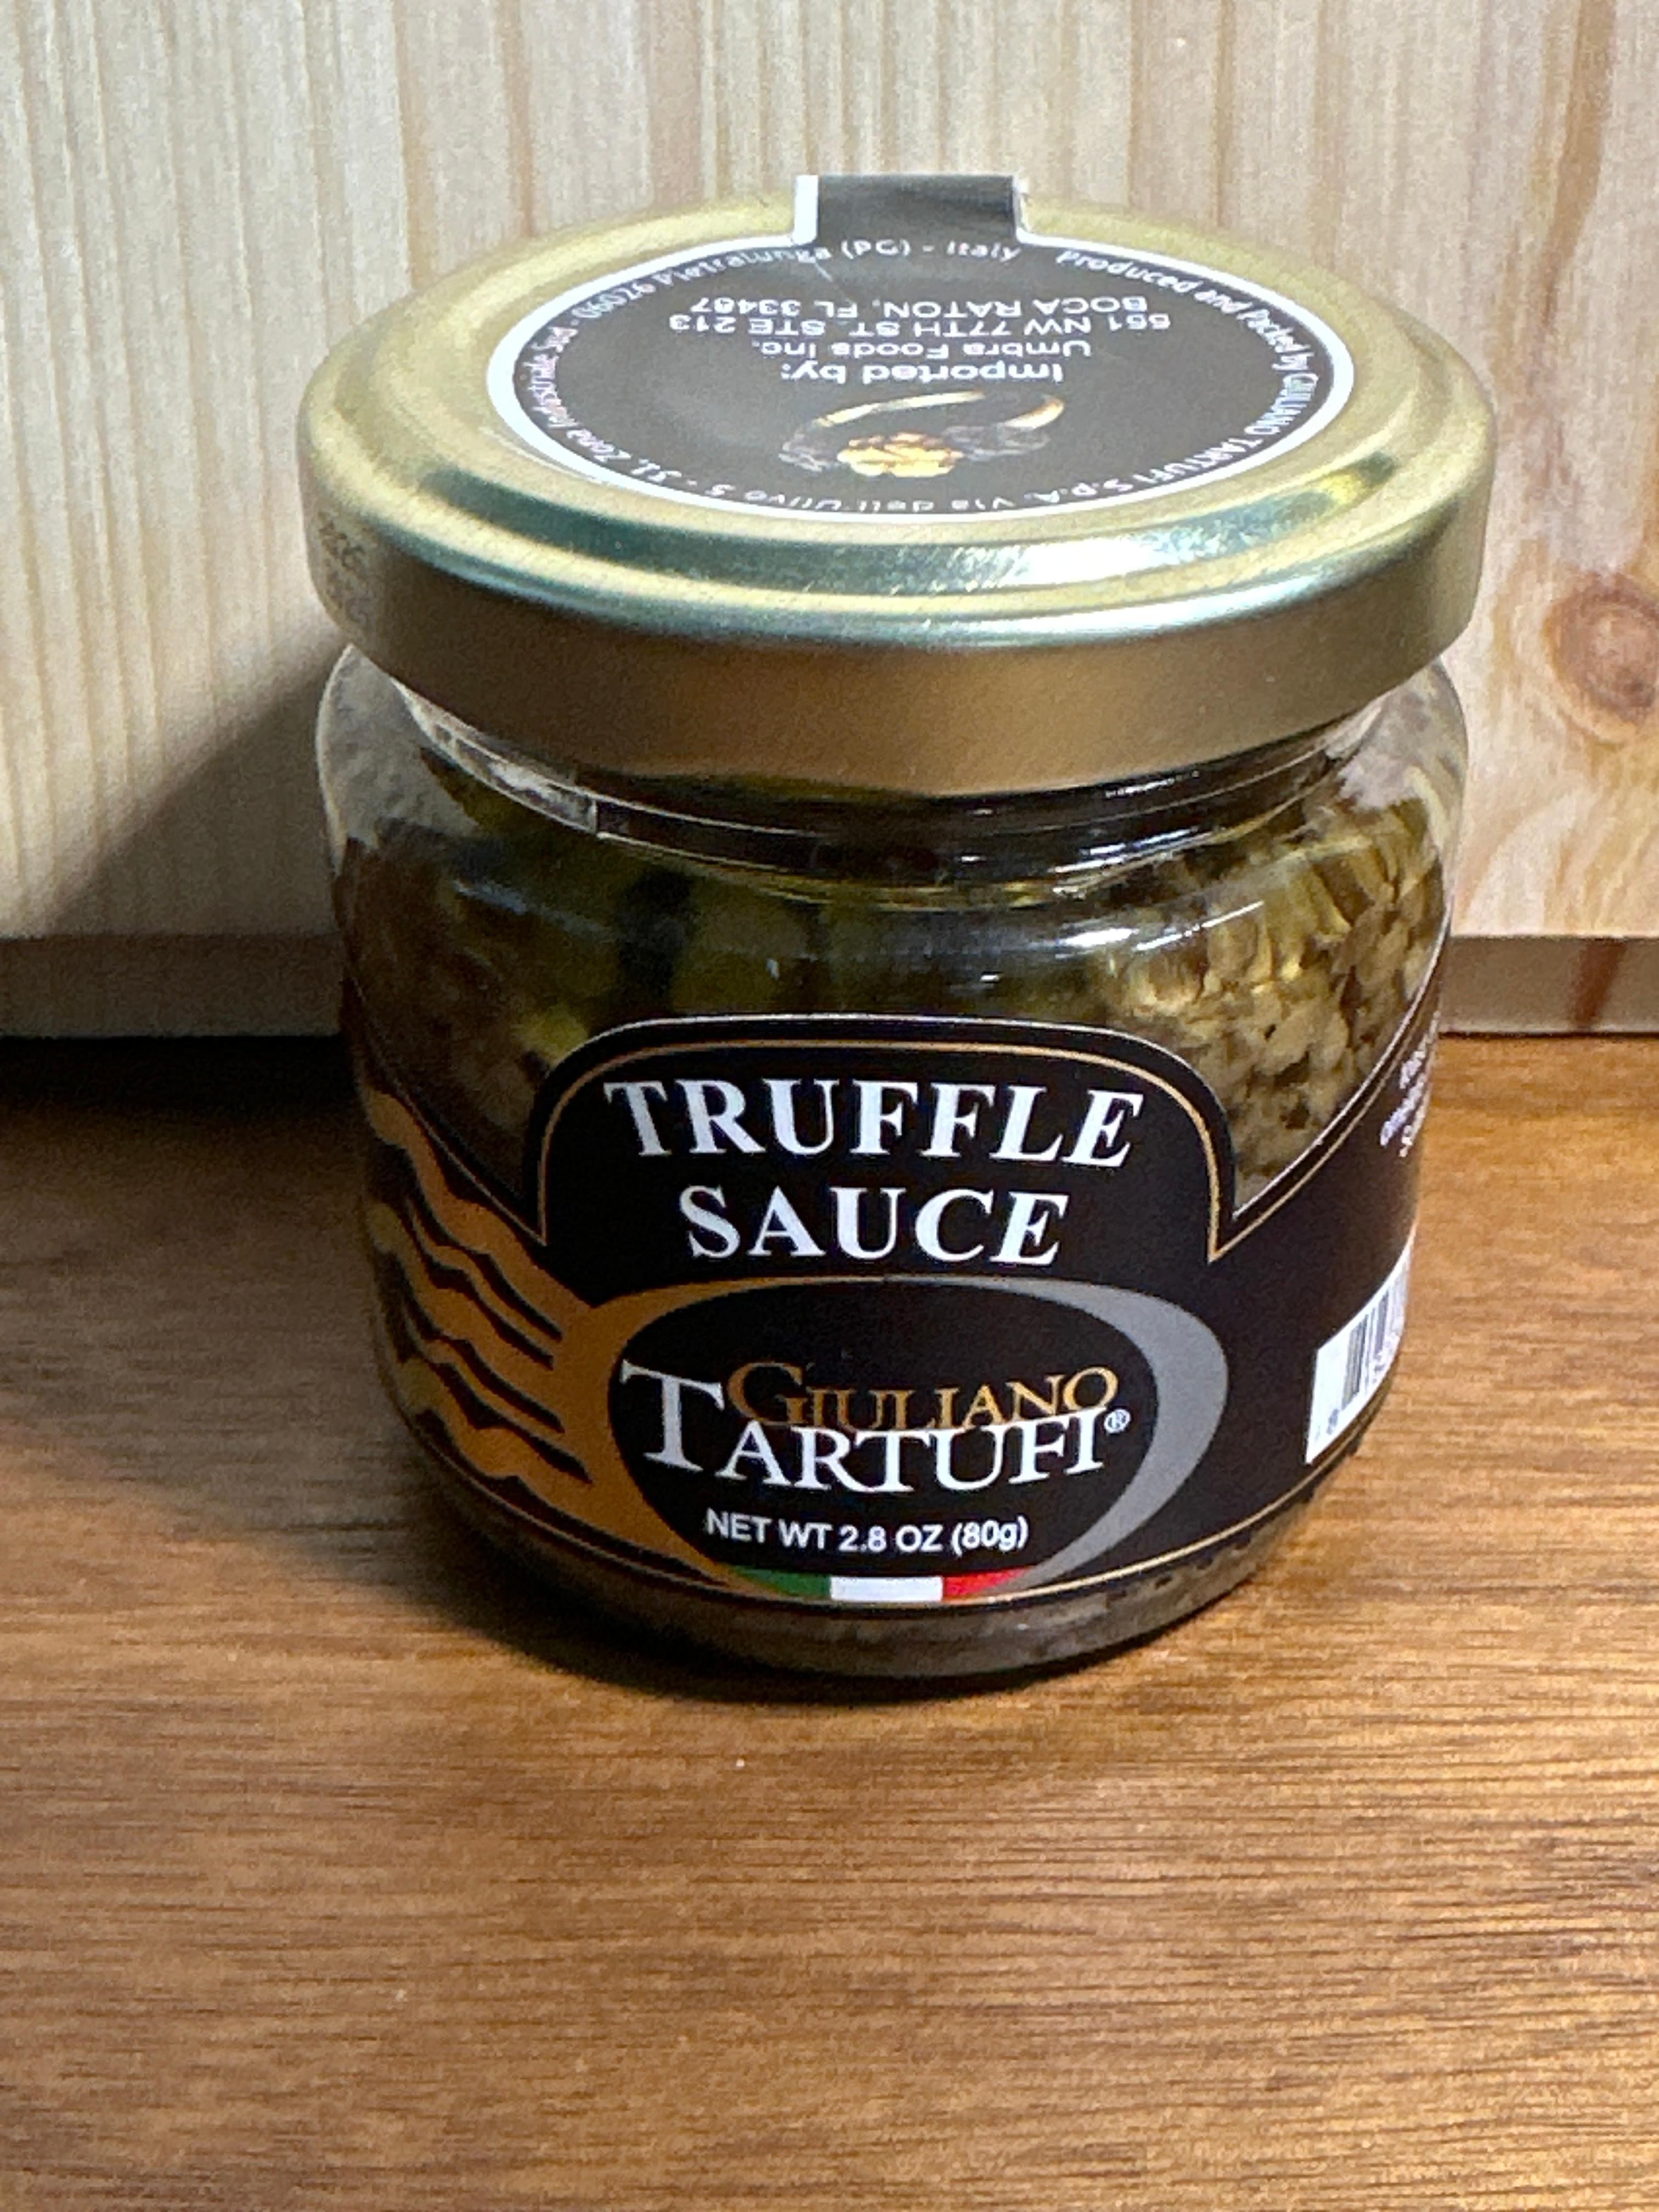 Giuliano Tartufi. Black Truffles sauce 2.8oz